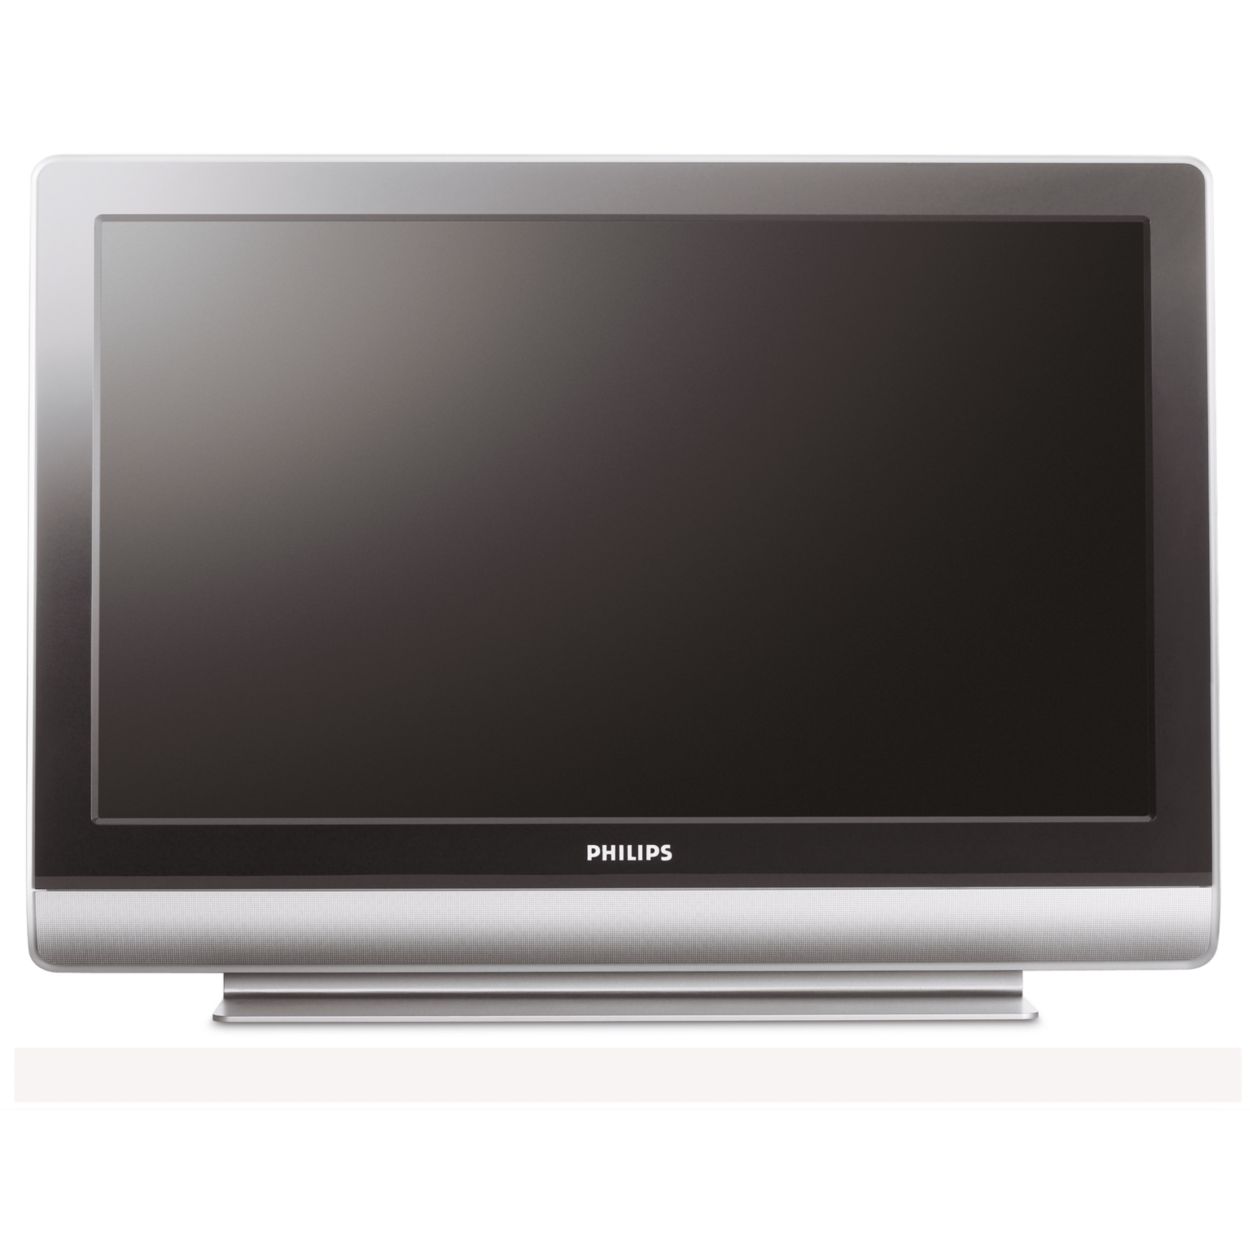 Телевизор philips серый. Philips Flat TV 26pf5320. Philips 32pf5320. Филипс флэт ТВ 42pf5320.